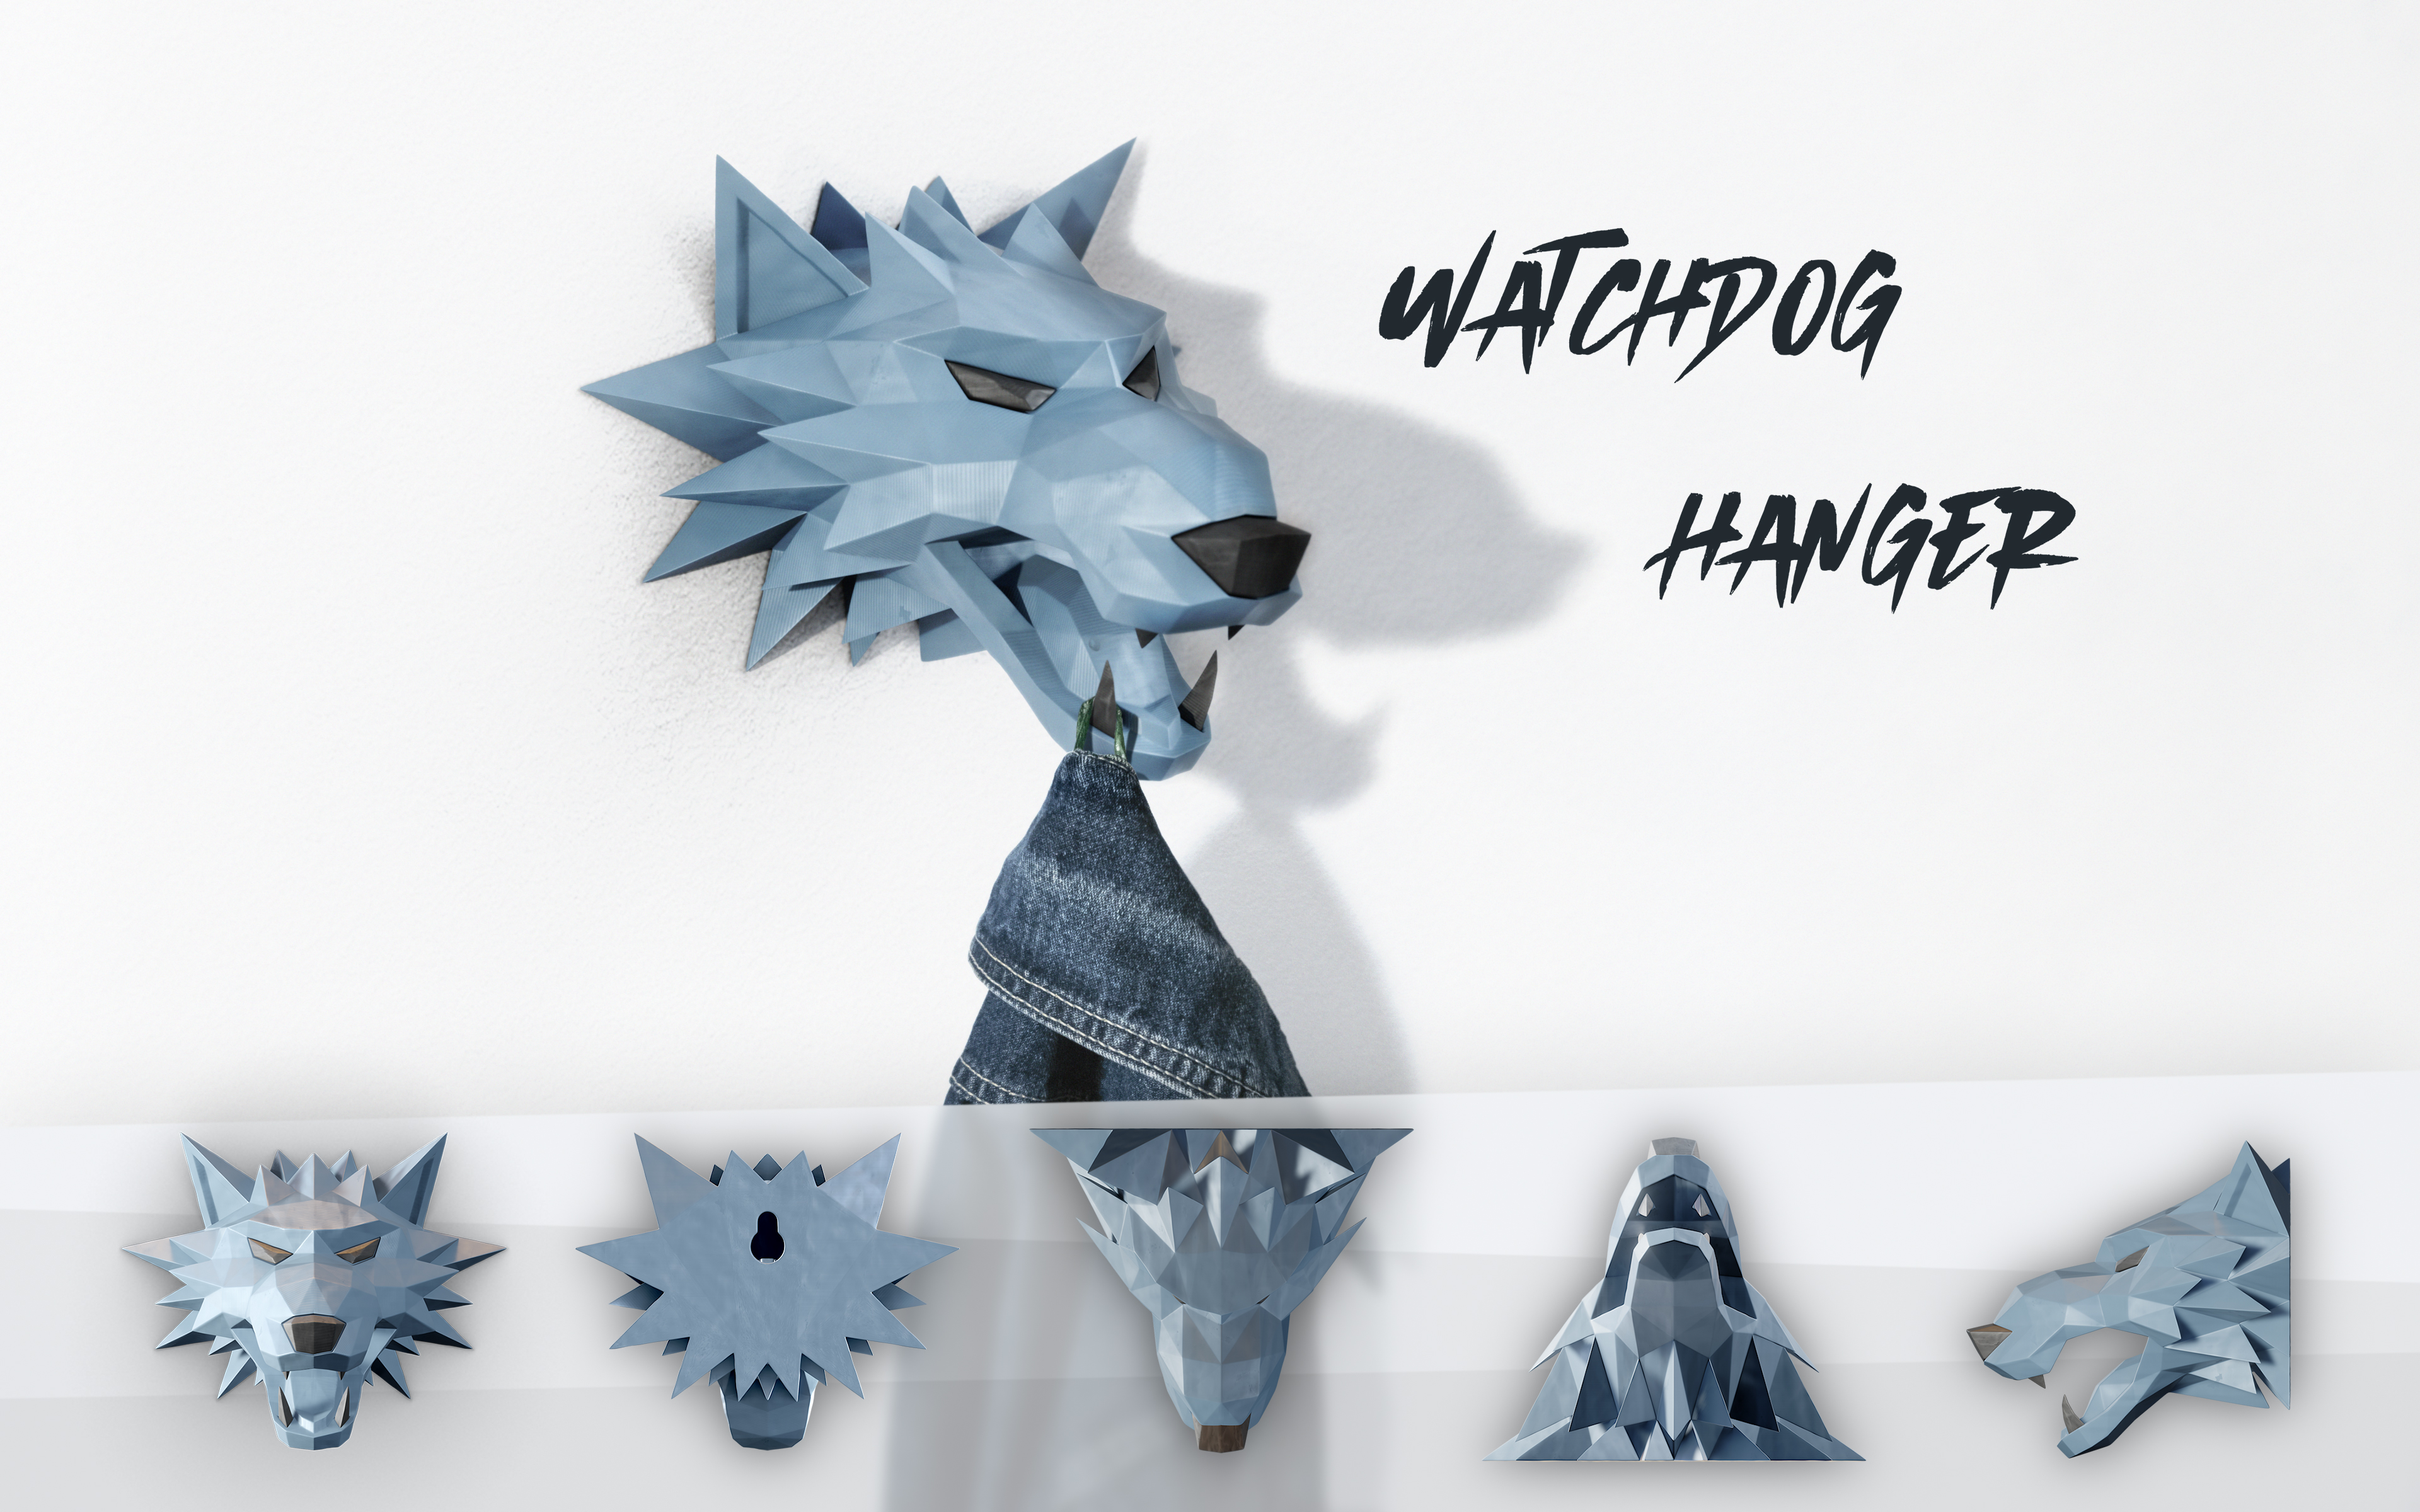 Watchdog Hanger